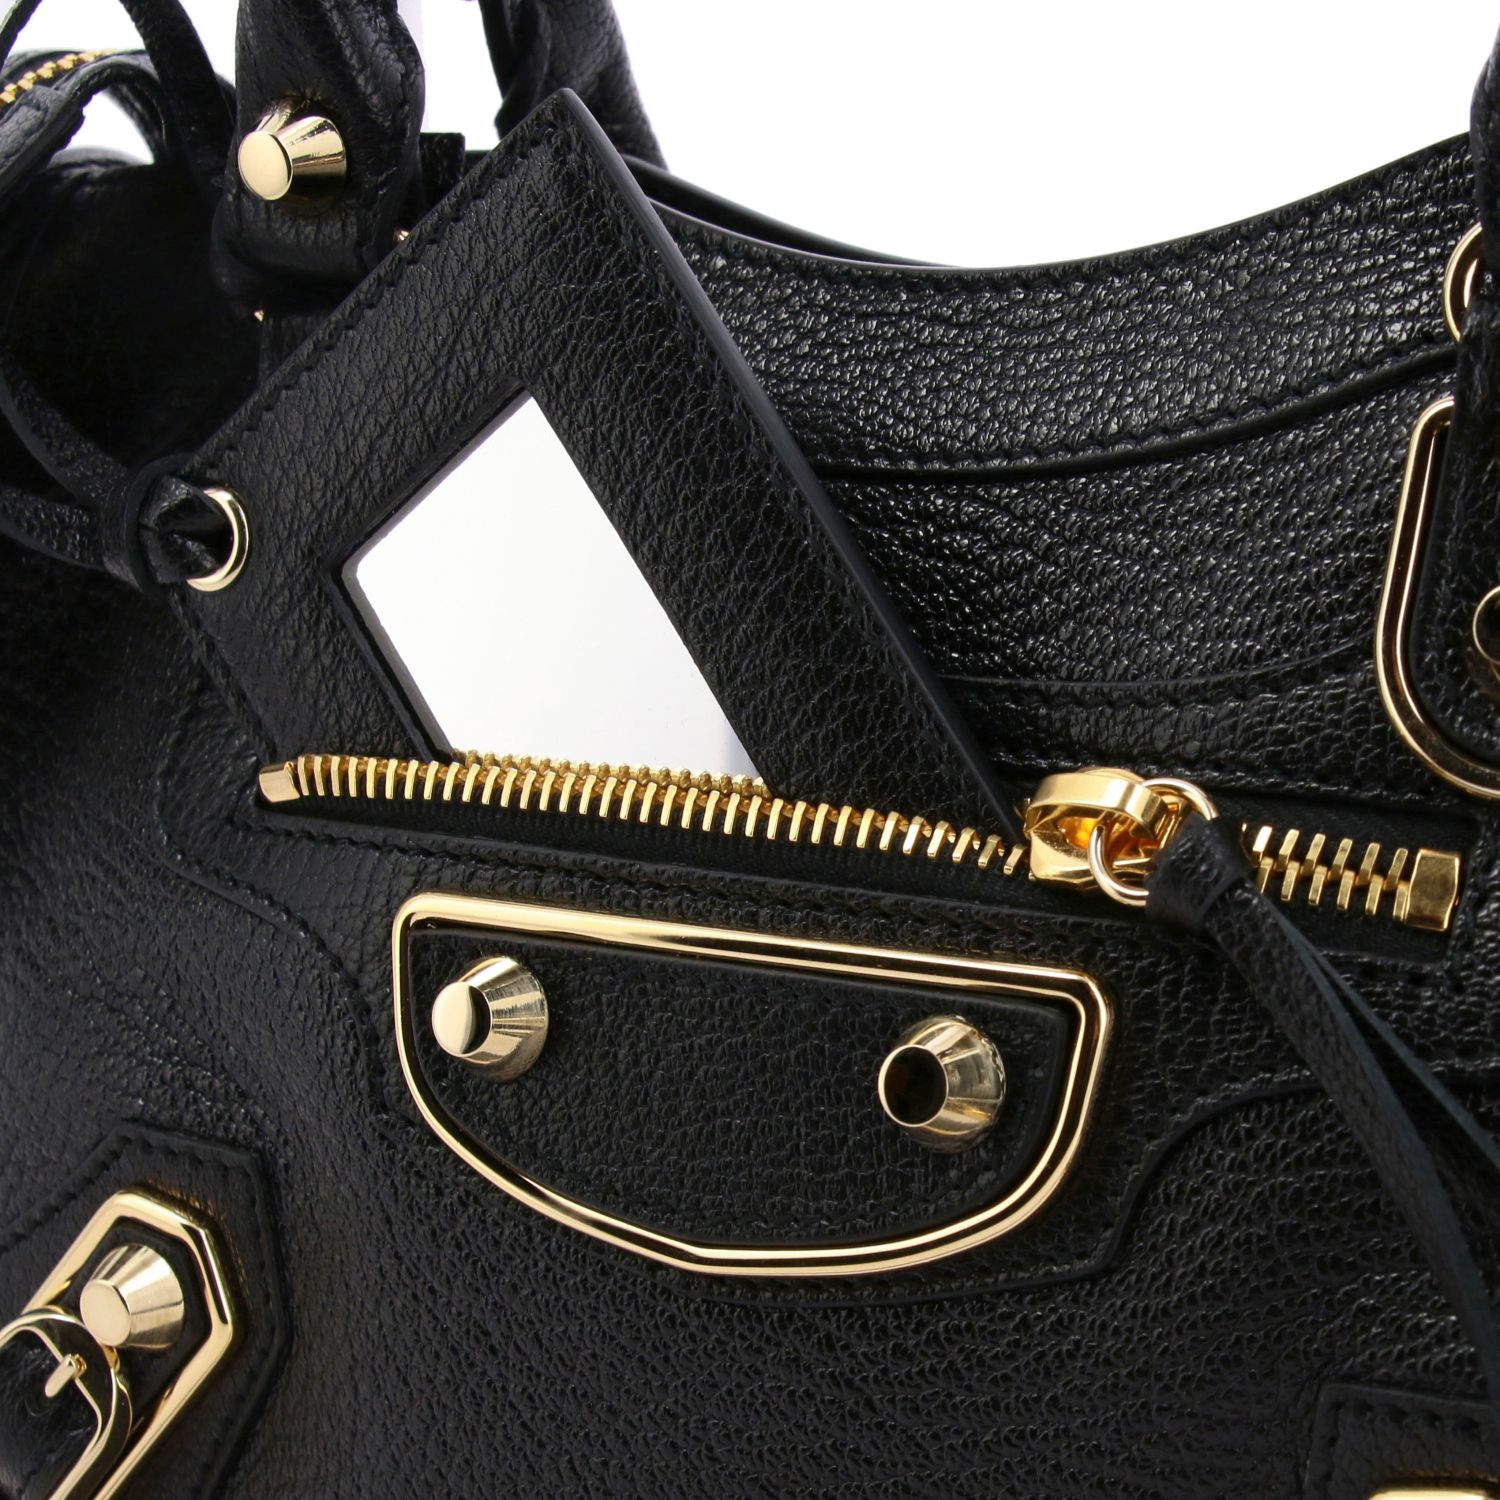 BALENCIAGA: City leather bag with metallic finishes | Mini Bag